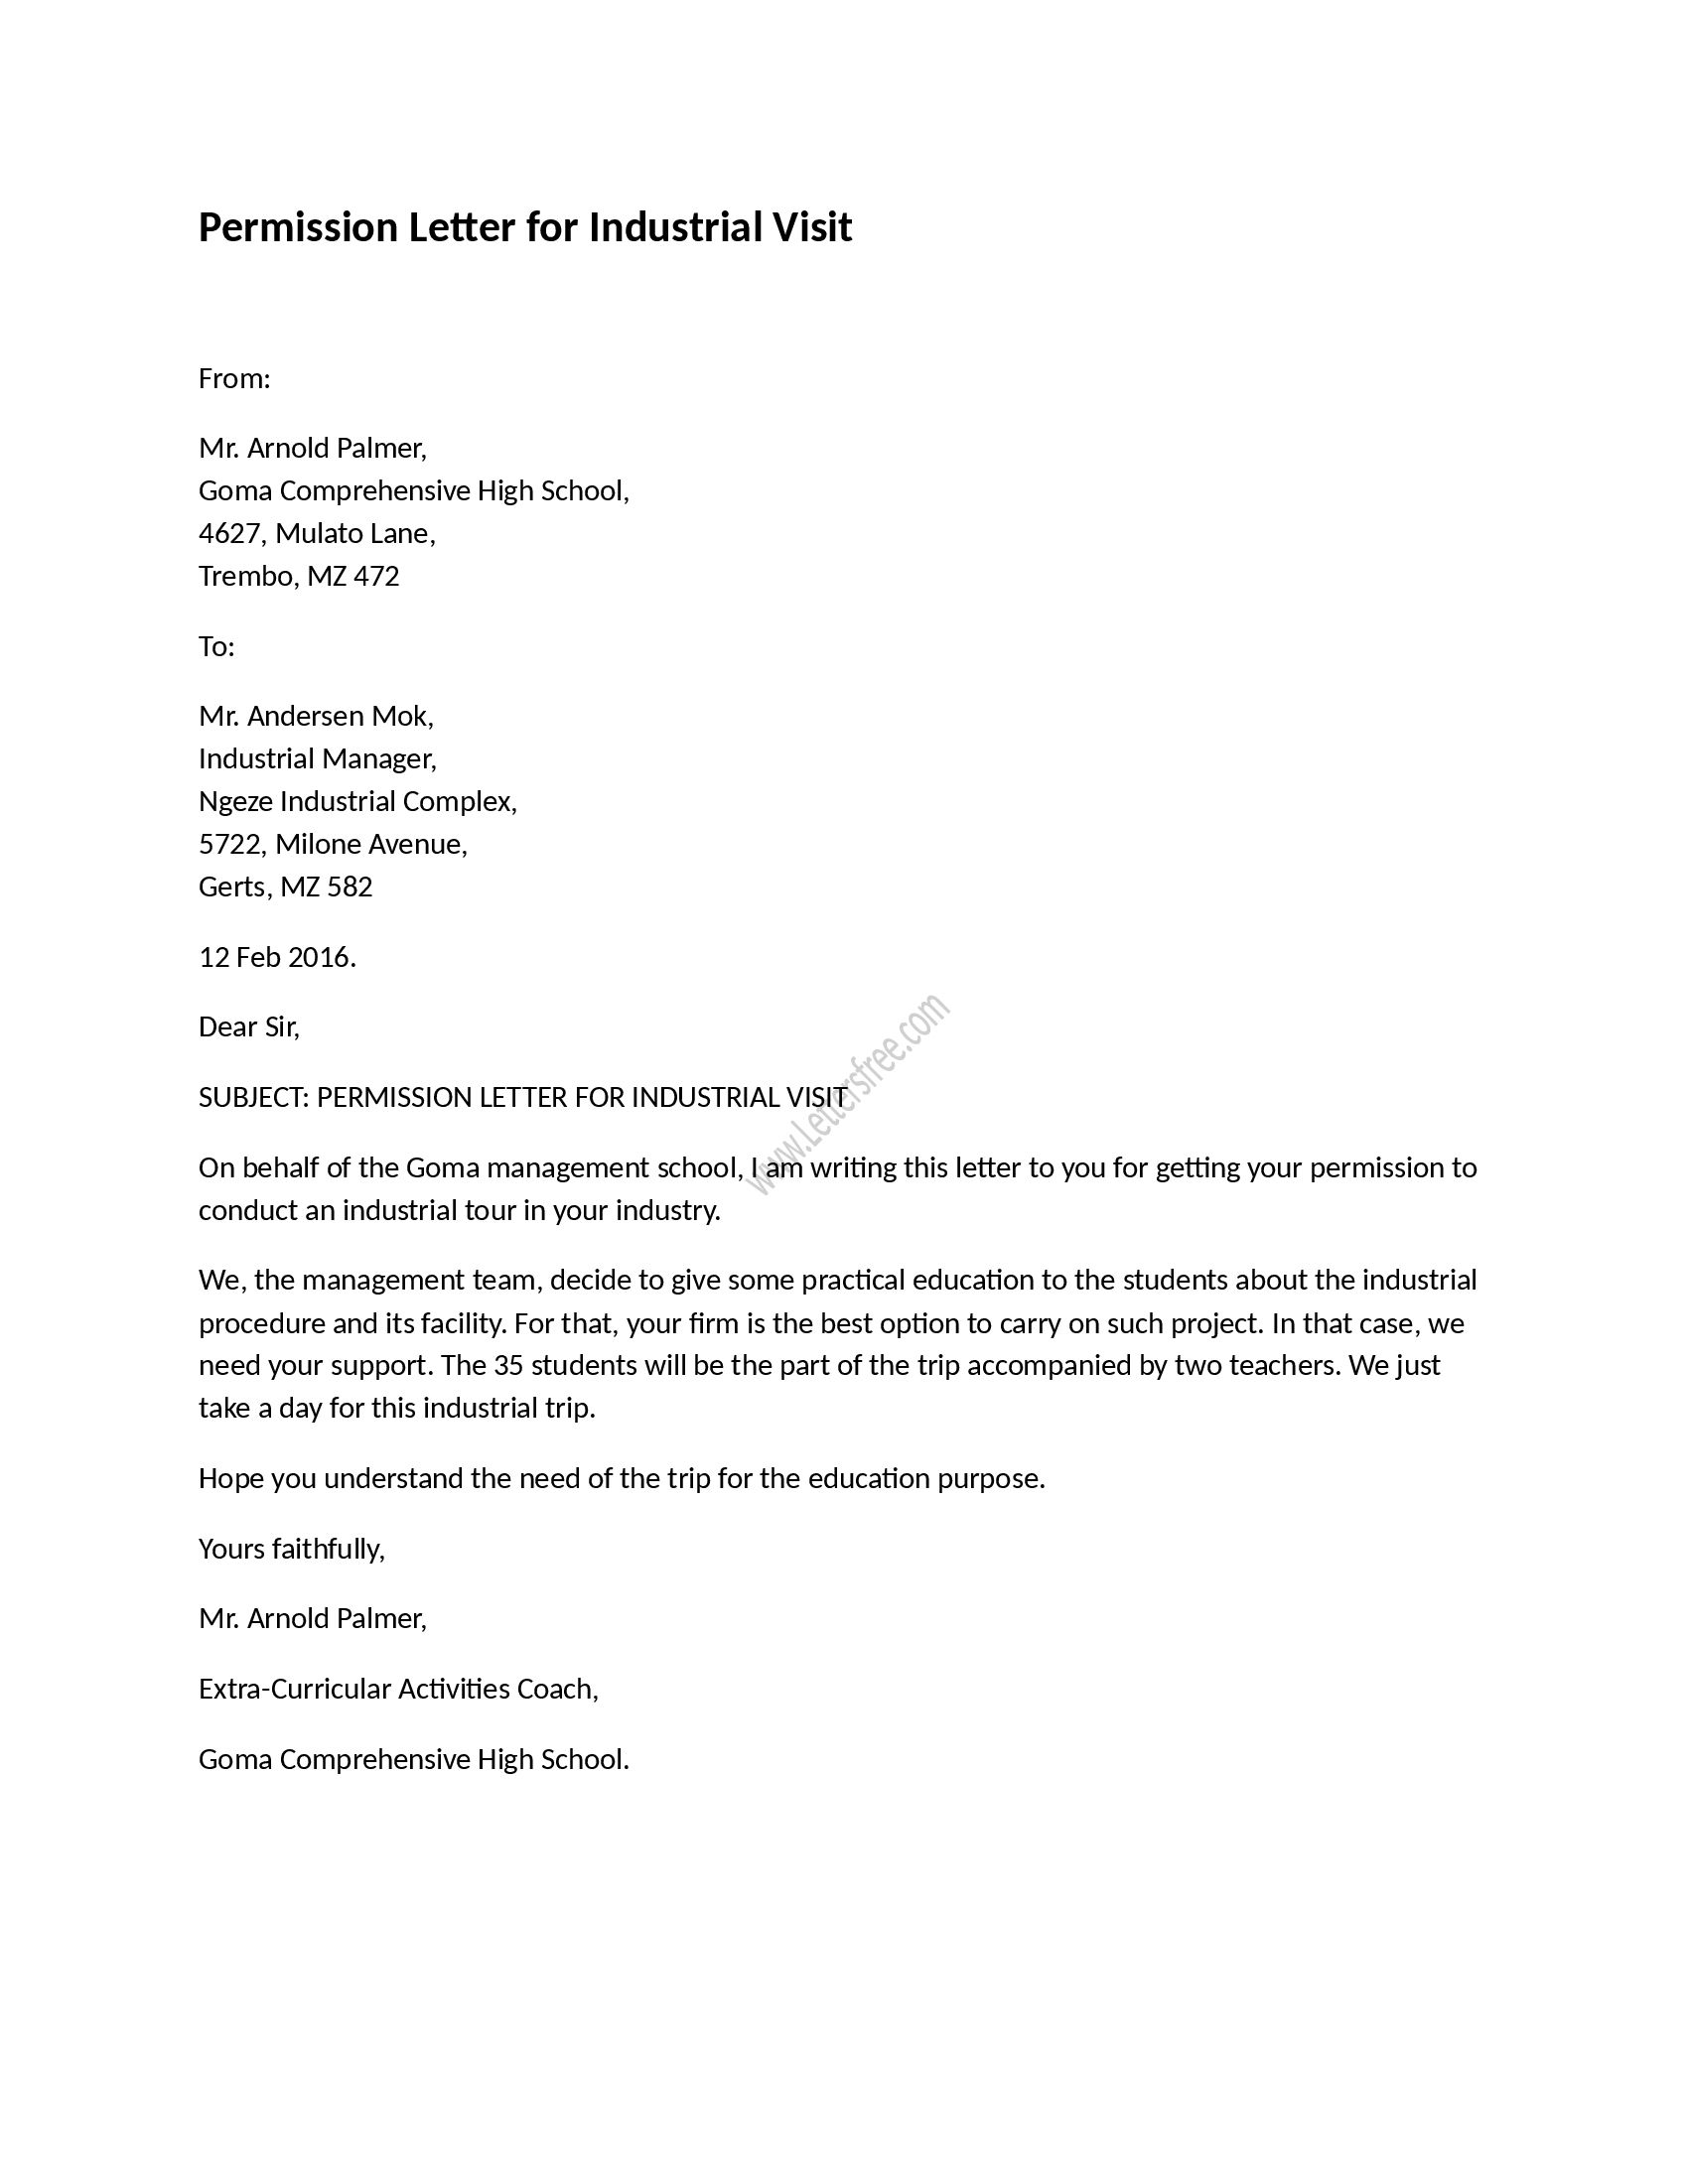 Child Care Authorization Letter Template - Permission Letter for Industrial Visit Pinterest